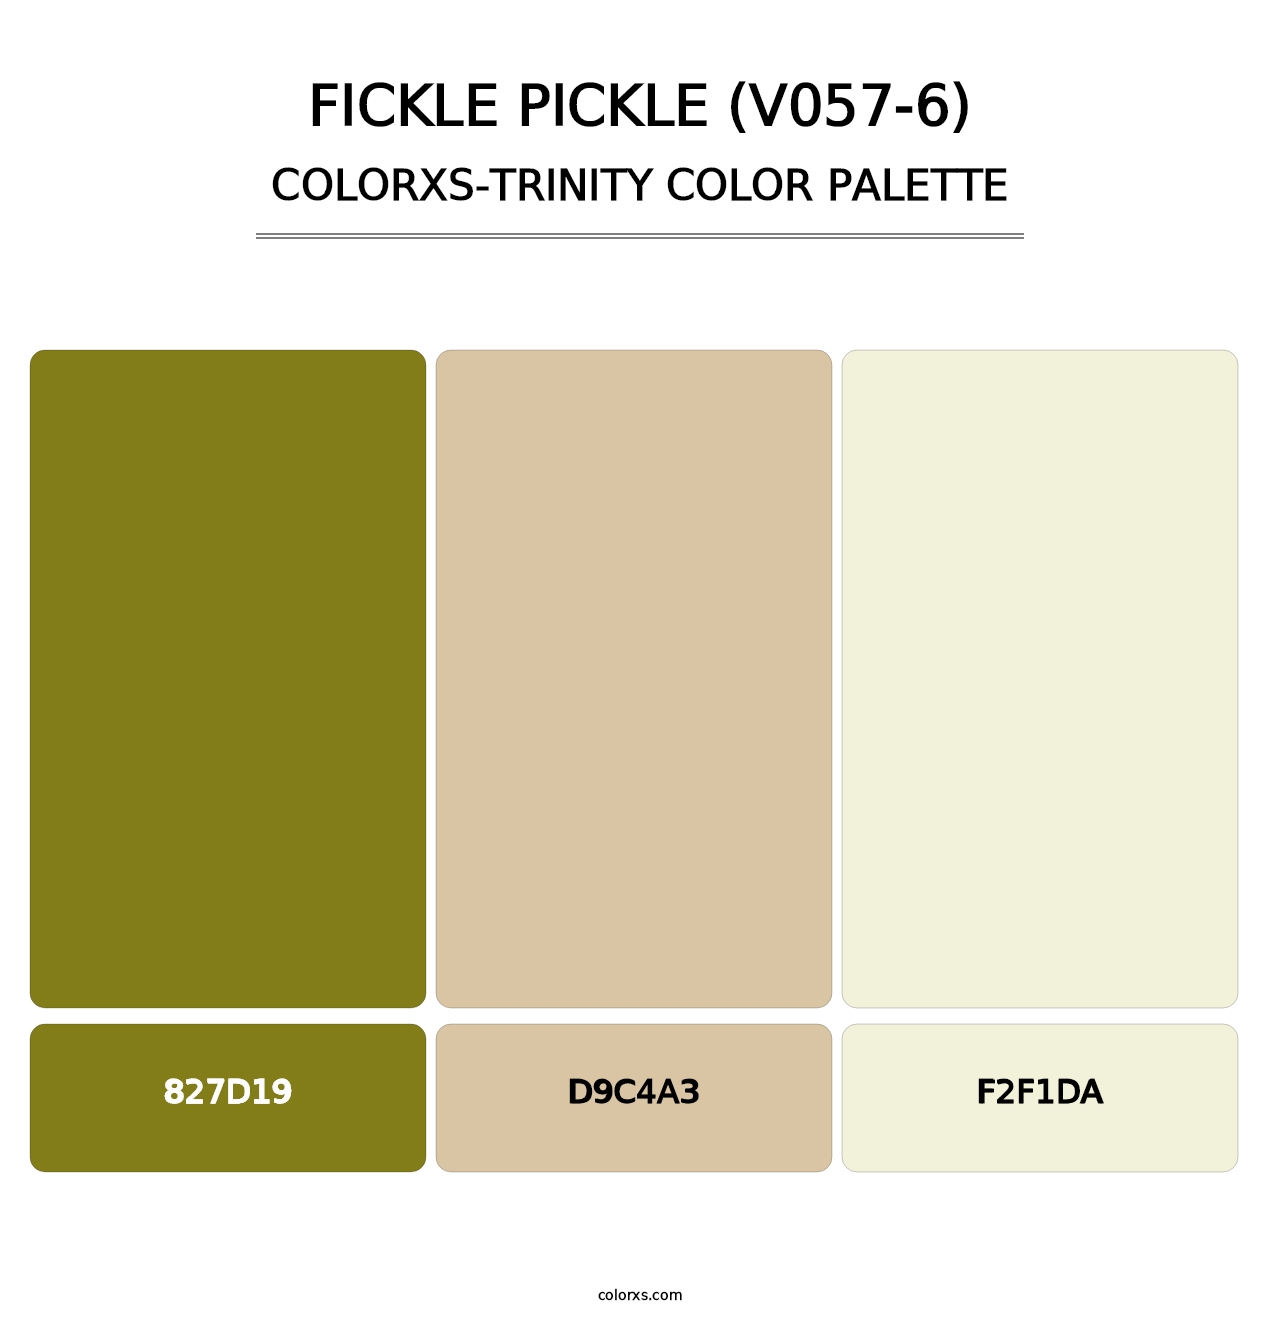 Fickle Pickle (V057-6) - Colorxs Trinity Palette